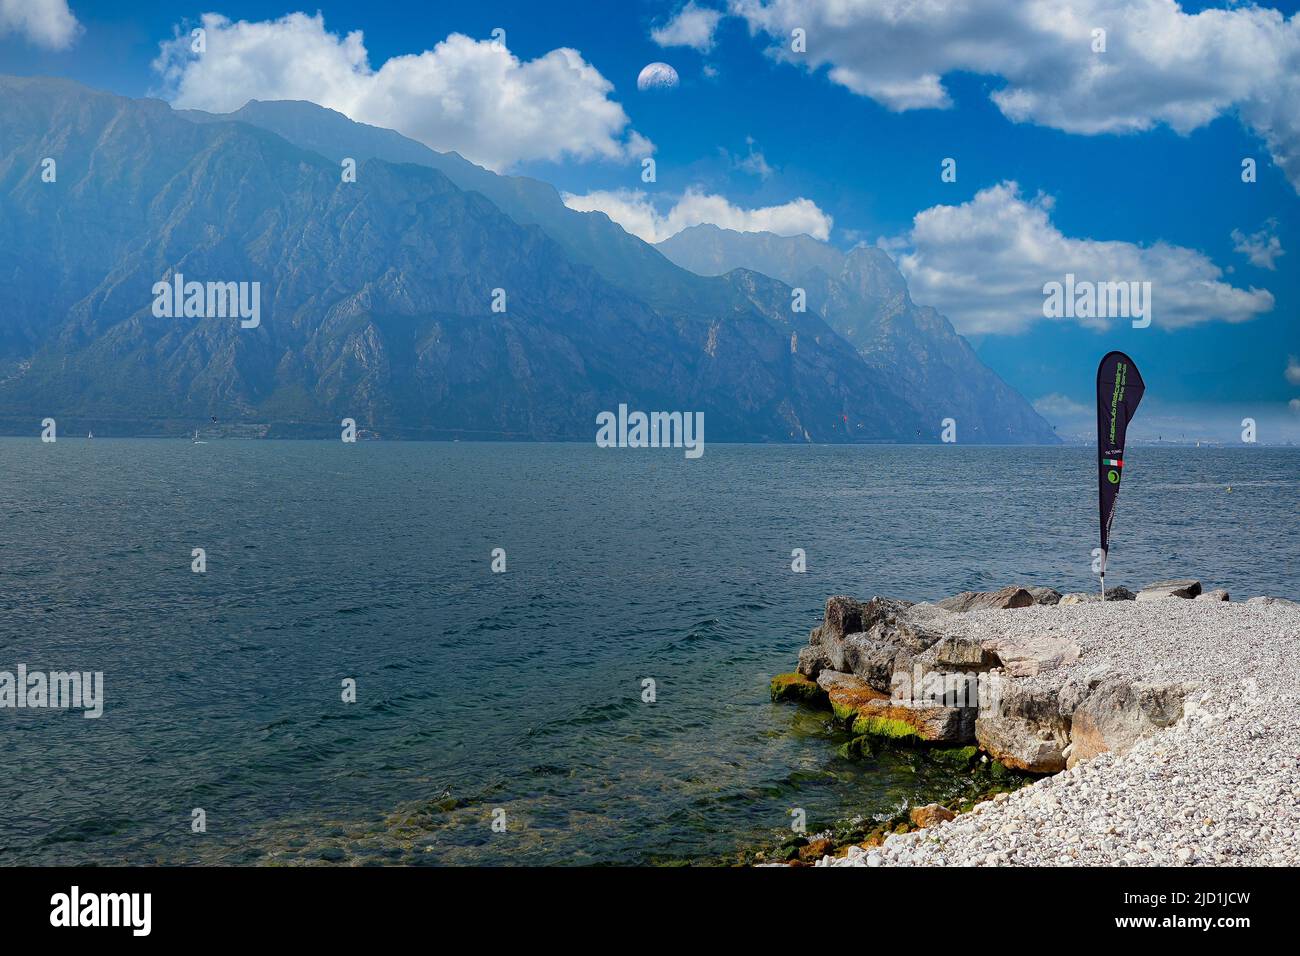 The garda lake waterfront near Torbole in Italy scenic image. Stock Photo